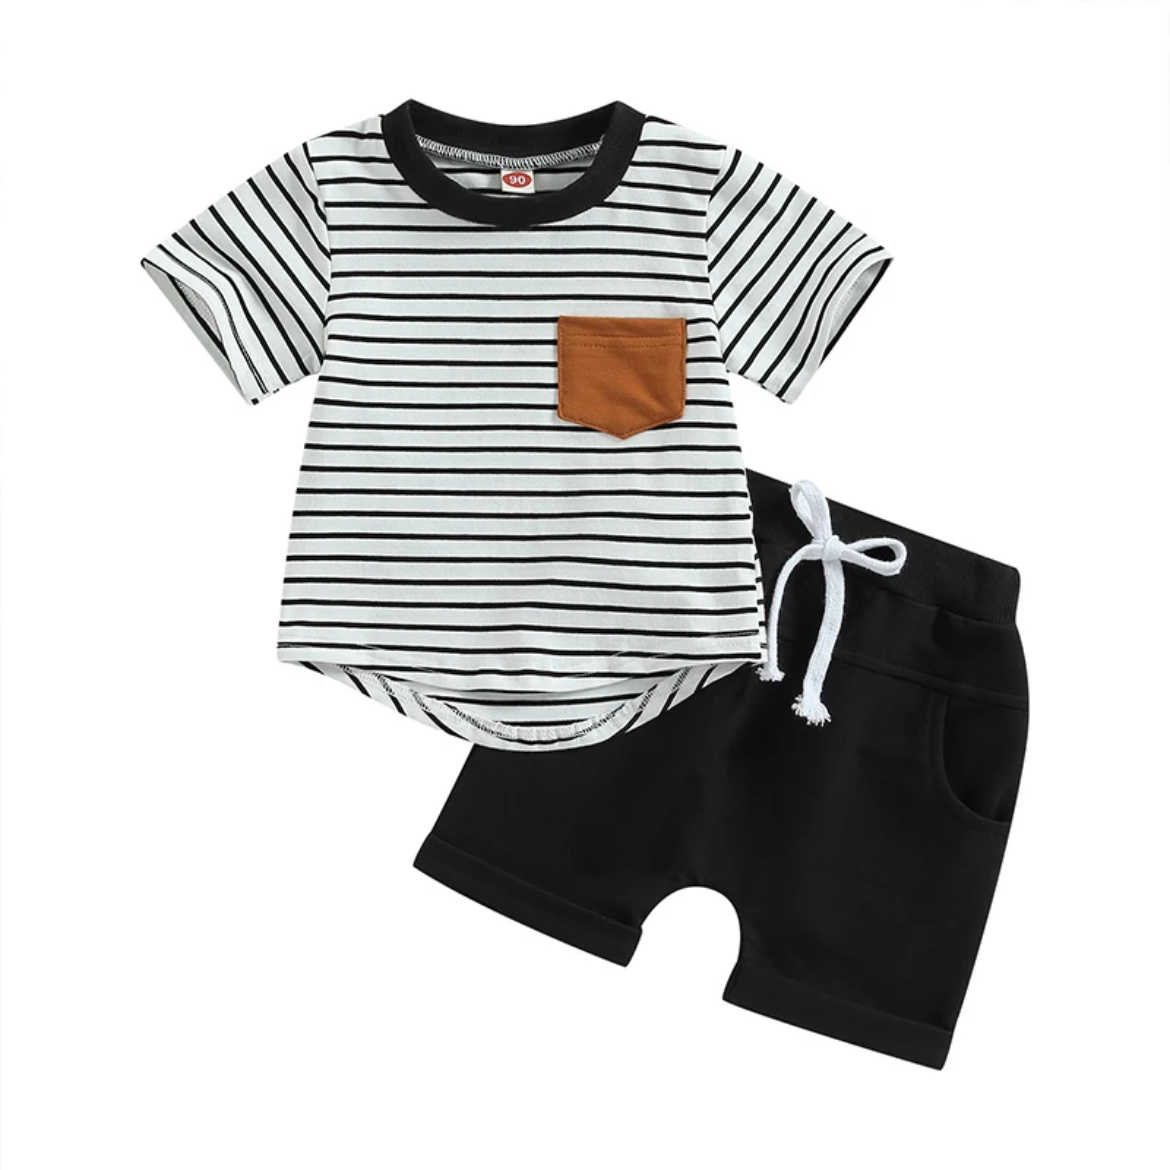 White with Black Stripe & Rust Pocket - black shorts